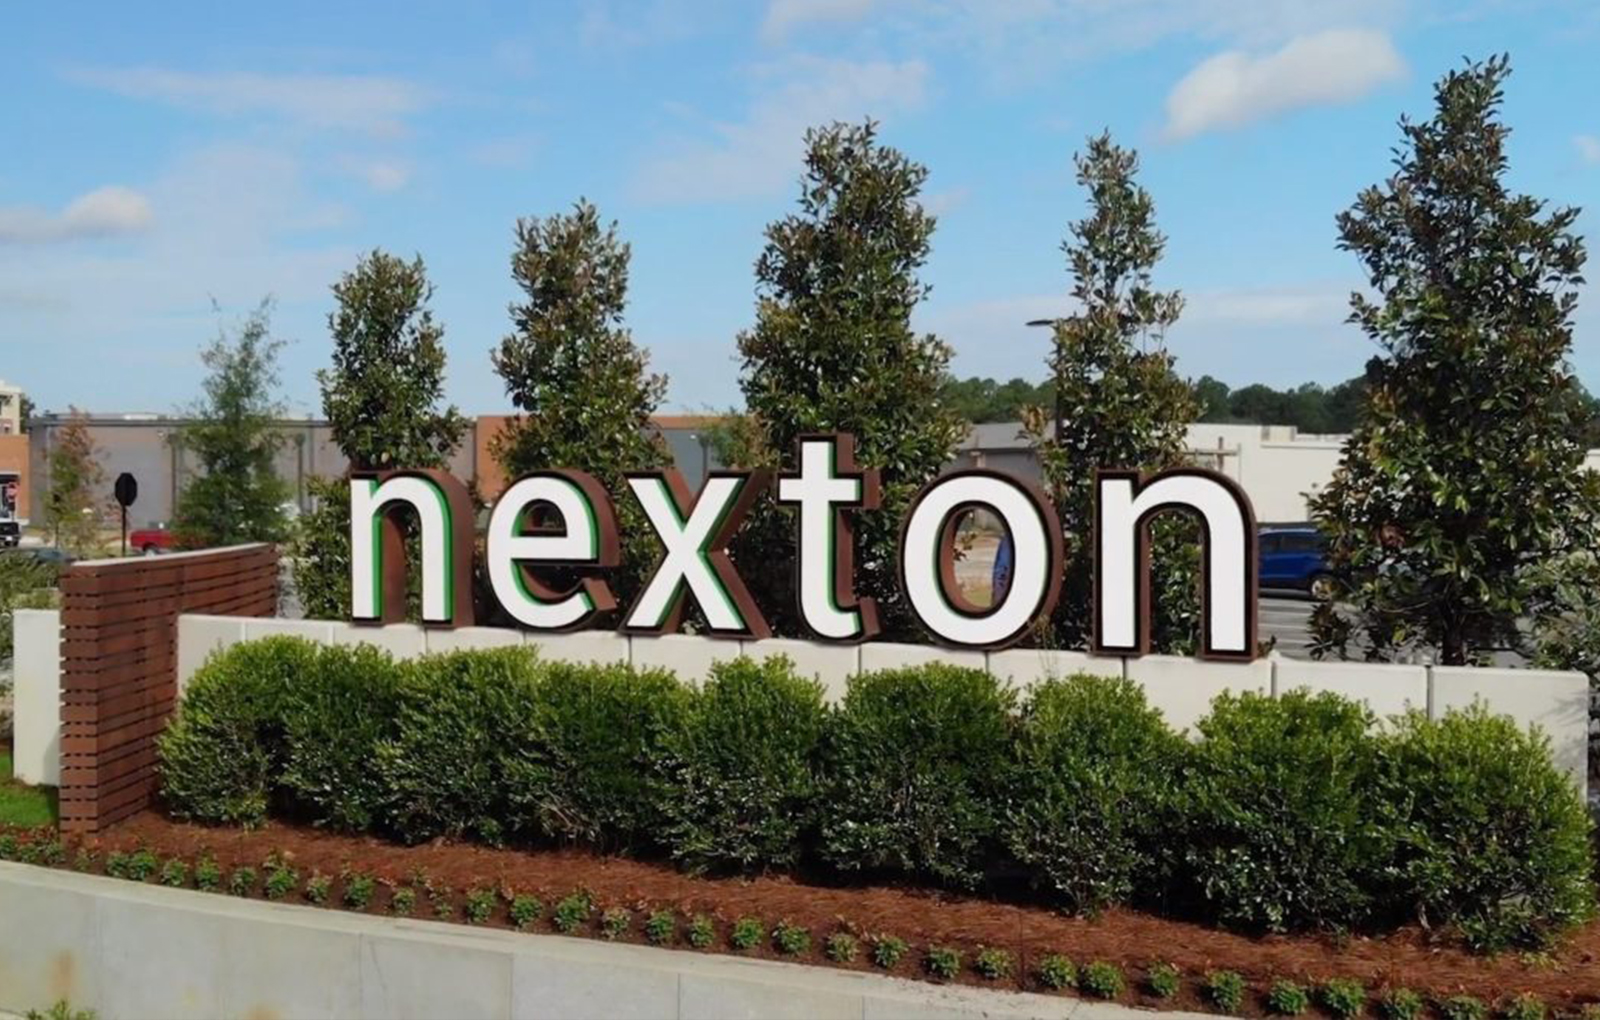 Photo of the Nexton development sign in Summerville, SC.